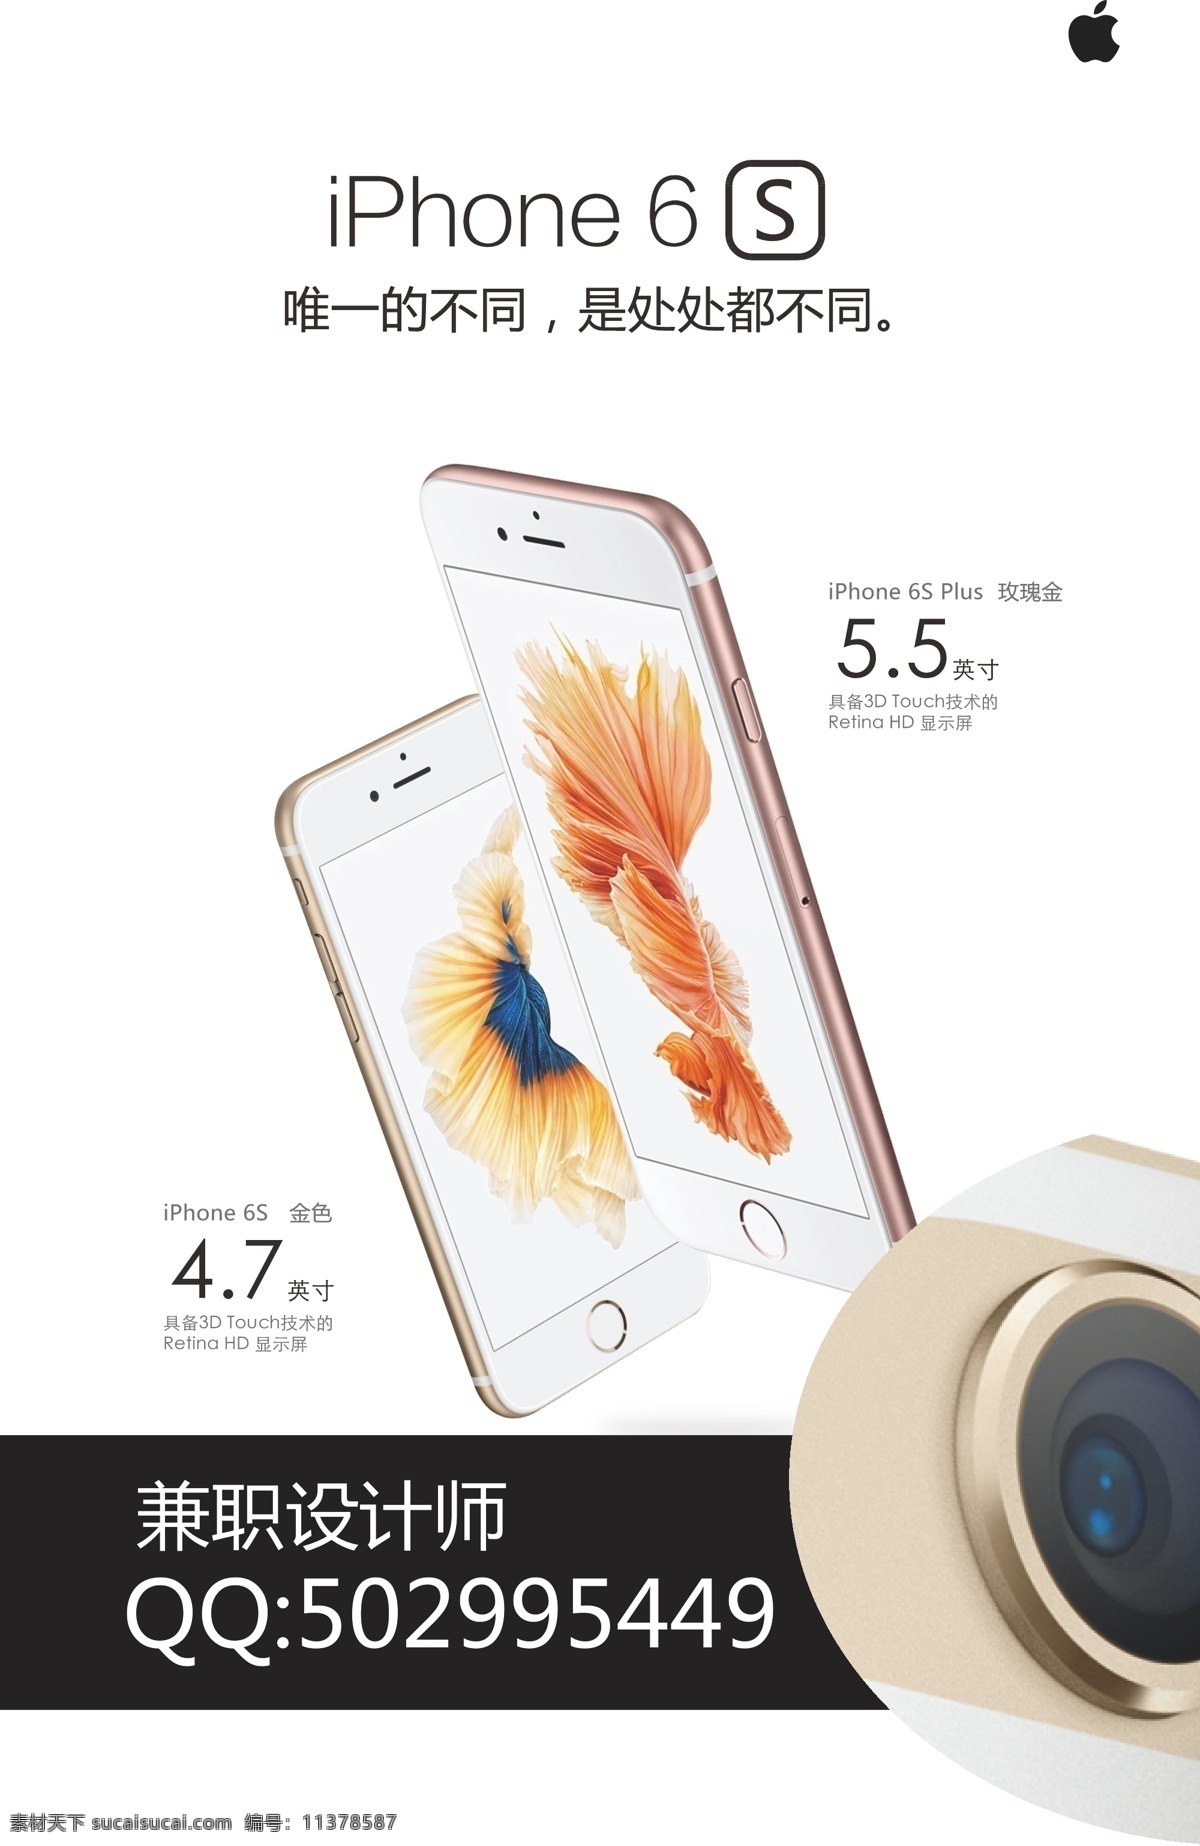 iphone6s 海报 苹果 iphone 新品 手机 原创图 白色